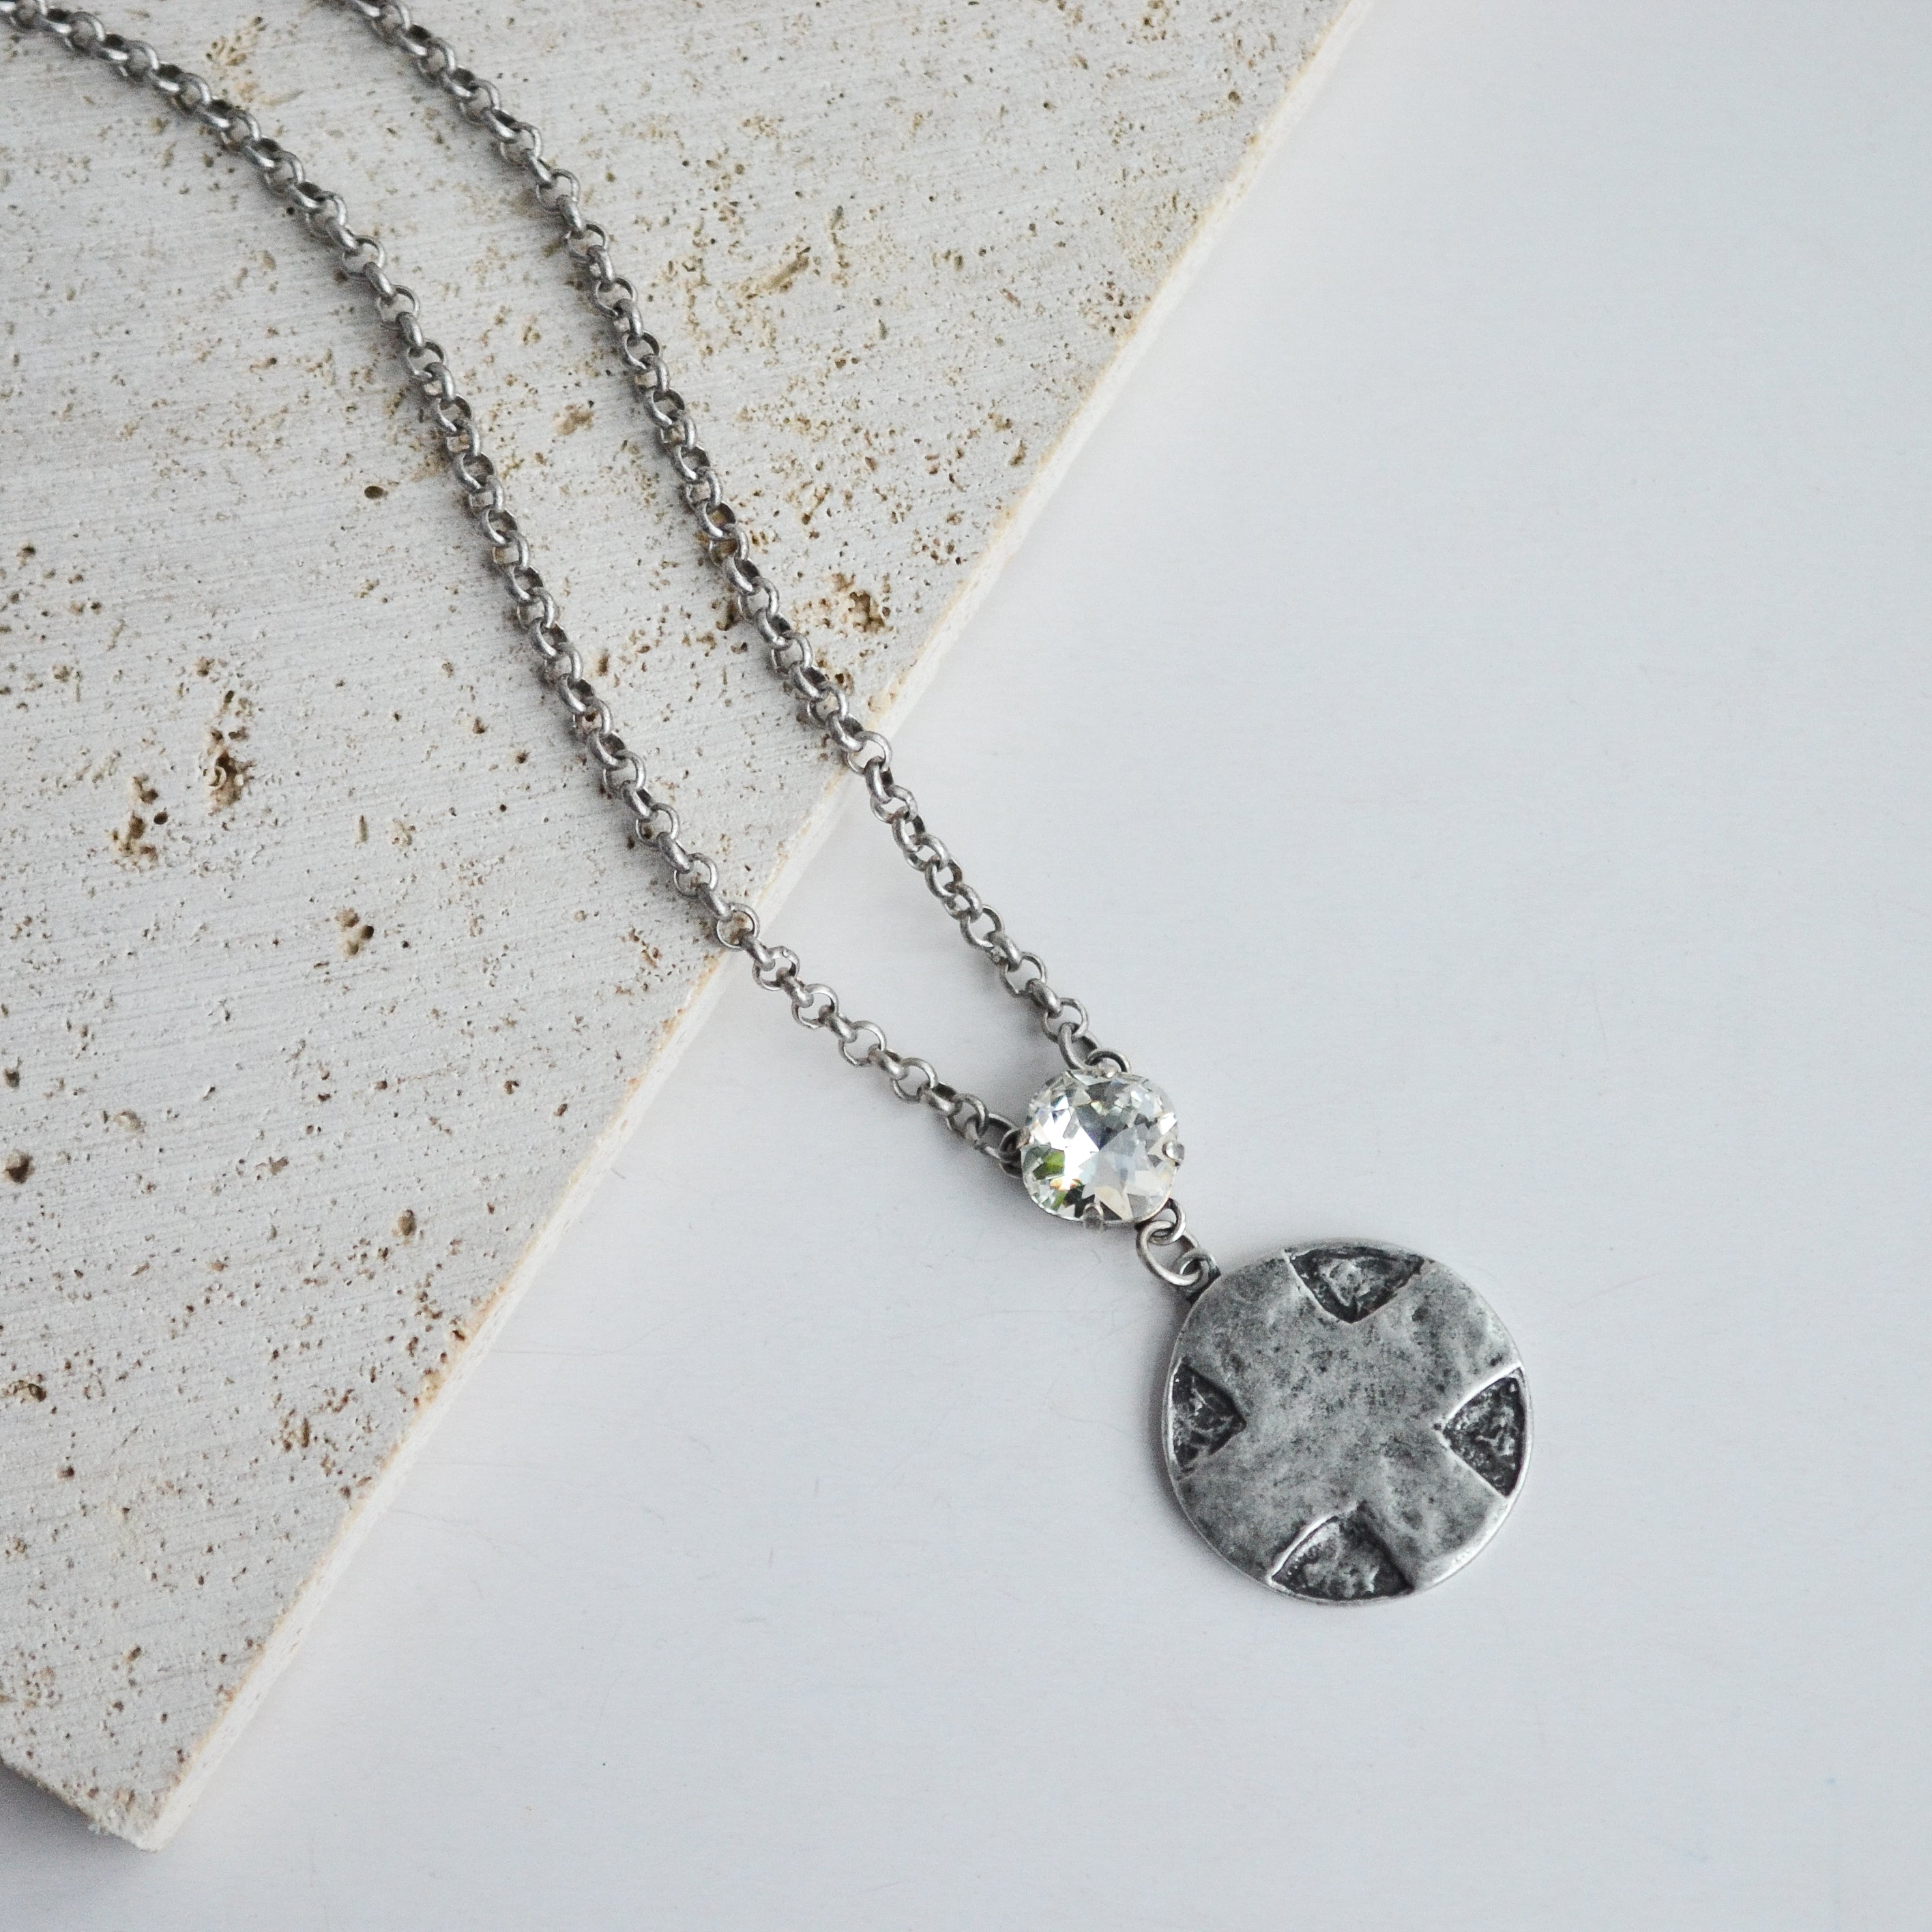 The Lords Prayer Cross Pendant Necklace - New in Beautiful Velvet Gift Box  | eBay